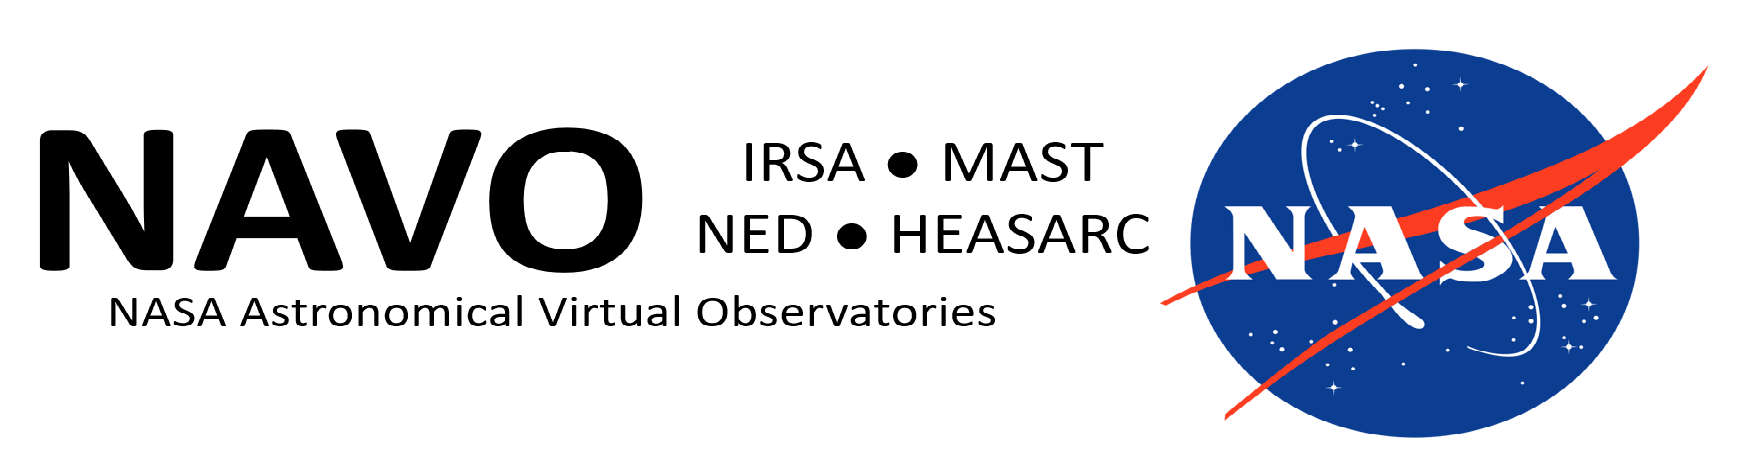 NASA Astronomical Virtual Observatories